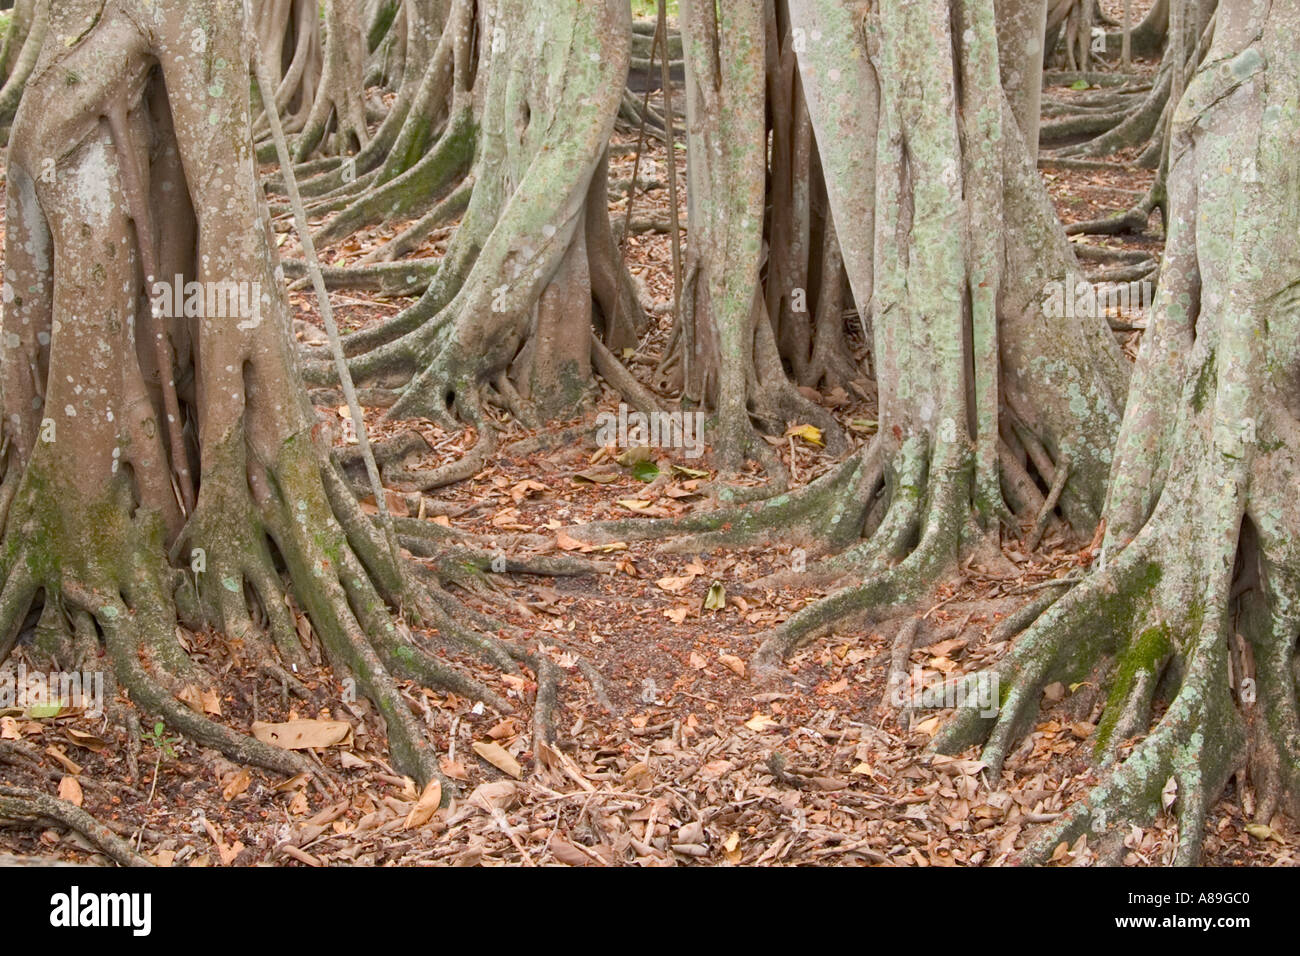 Banyon tree tropical Indian fig tree Ficus benghalensis Venice Florida Stock Photo